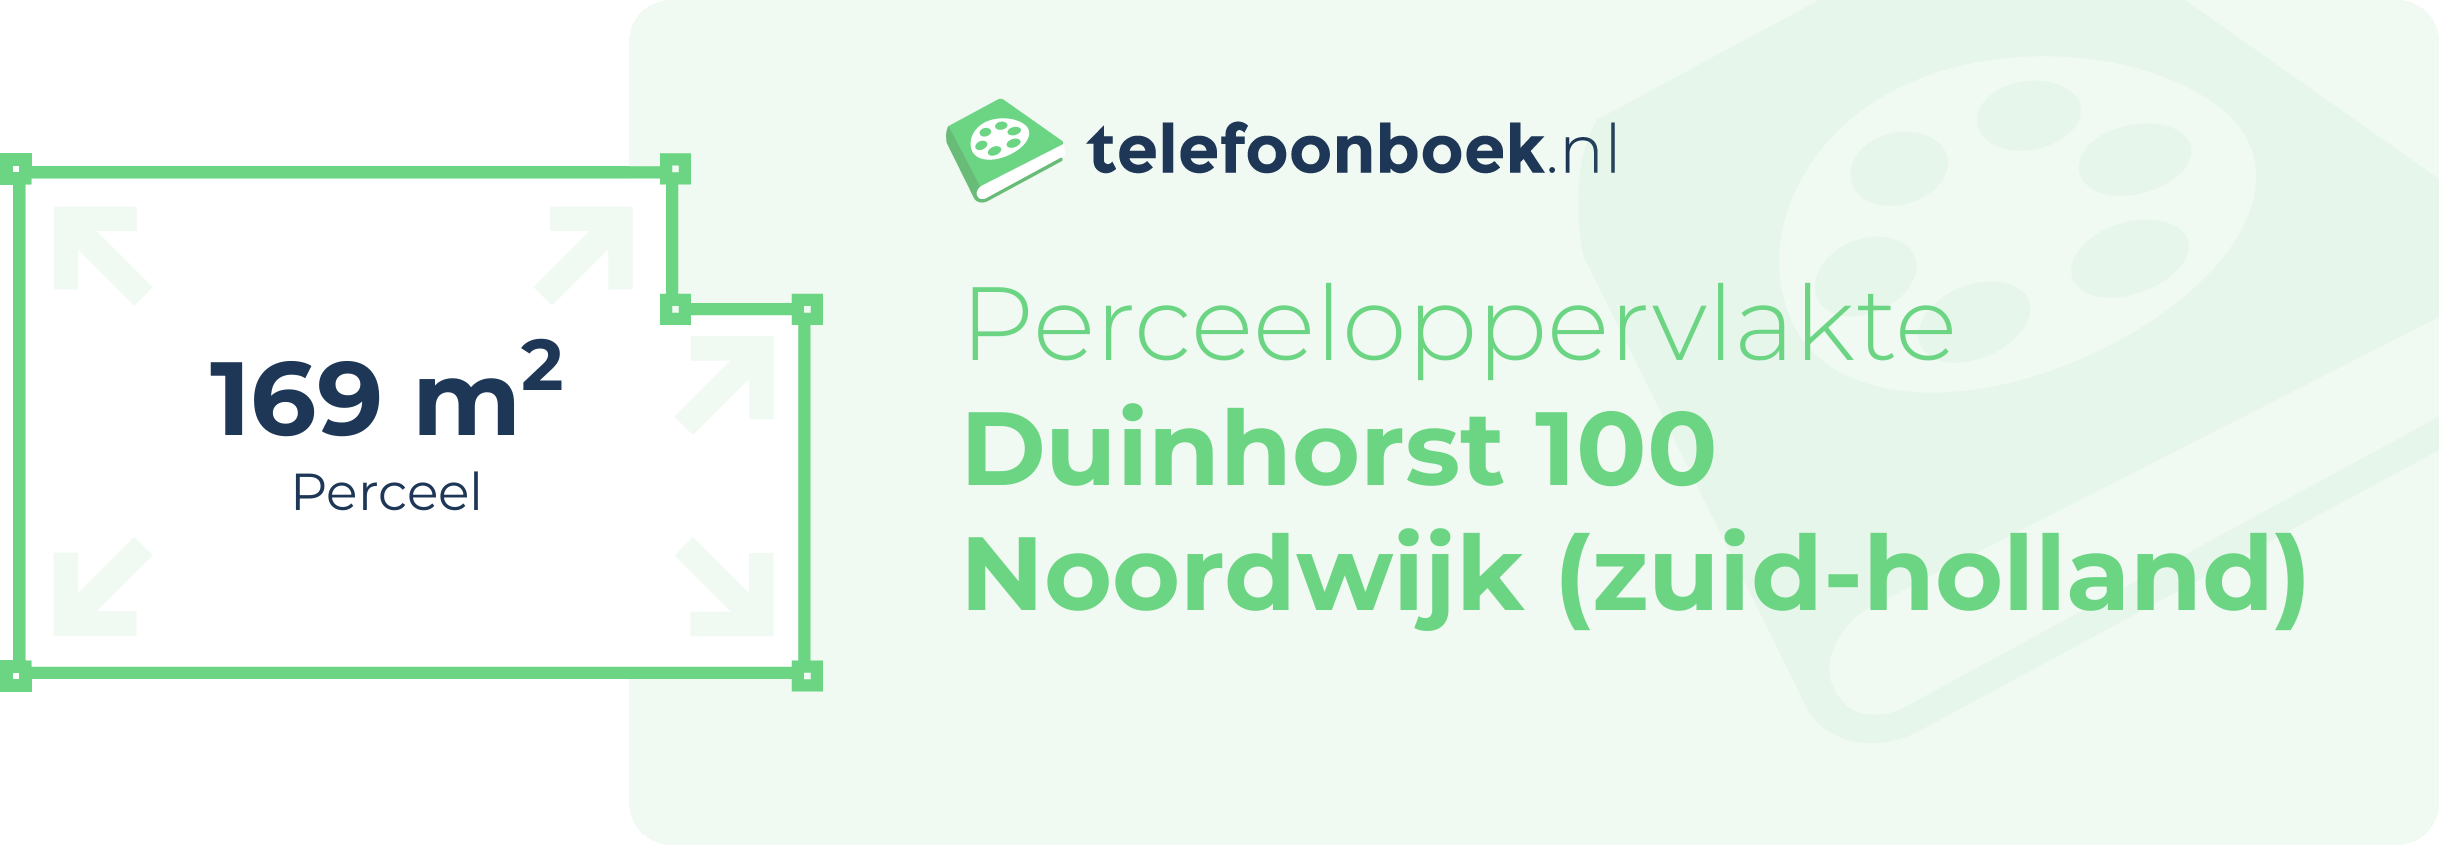 Perceeloppervlakte Duinhorst 100 Noordwijk (Zuid-Holland)